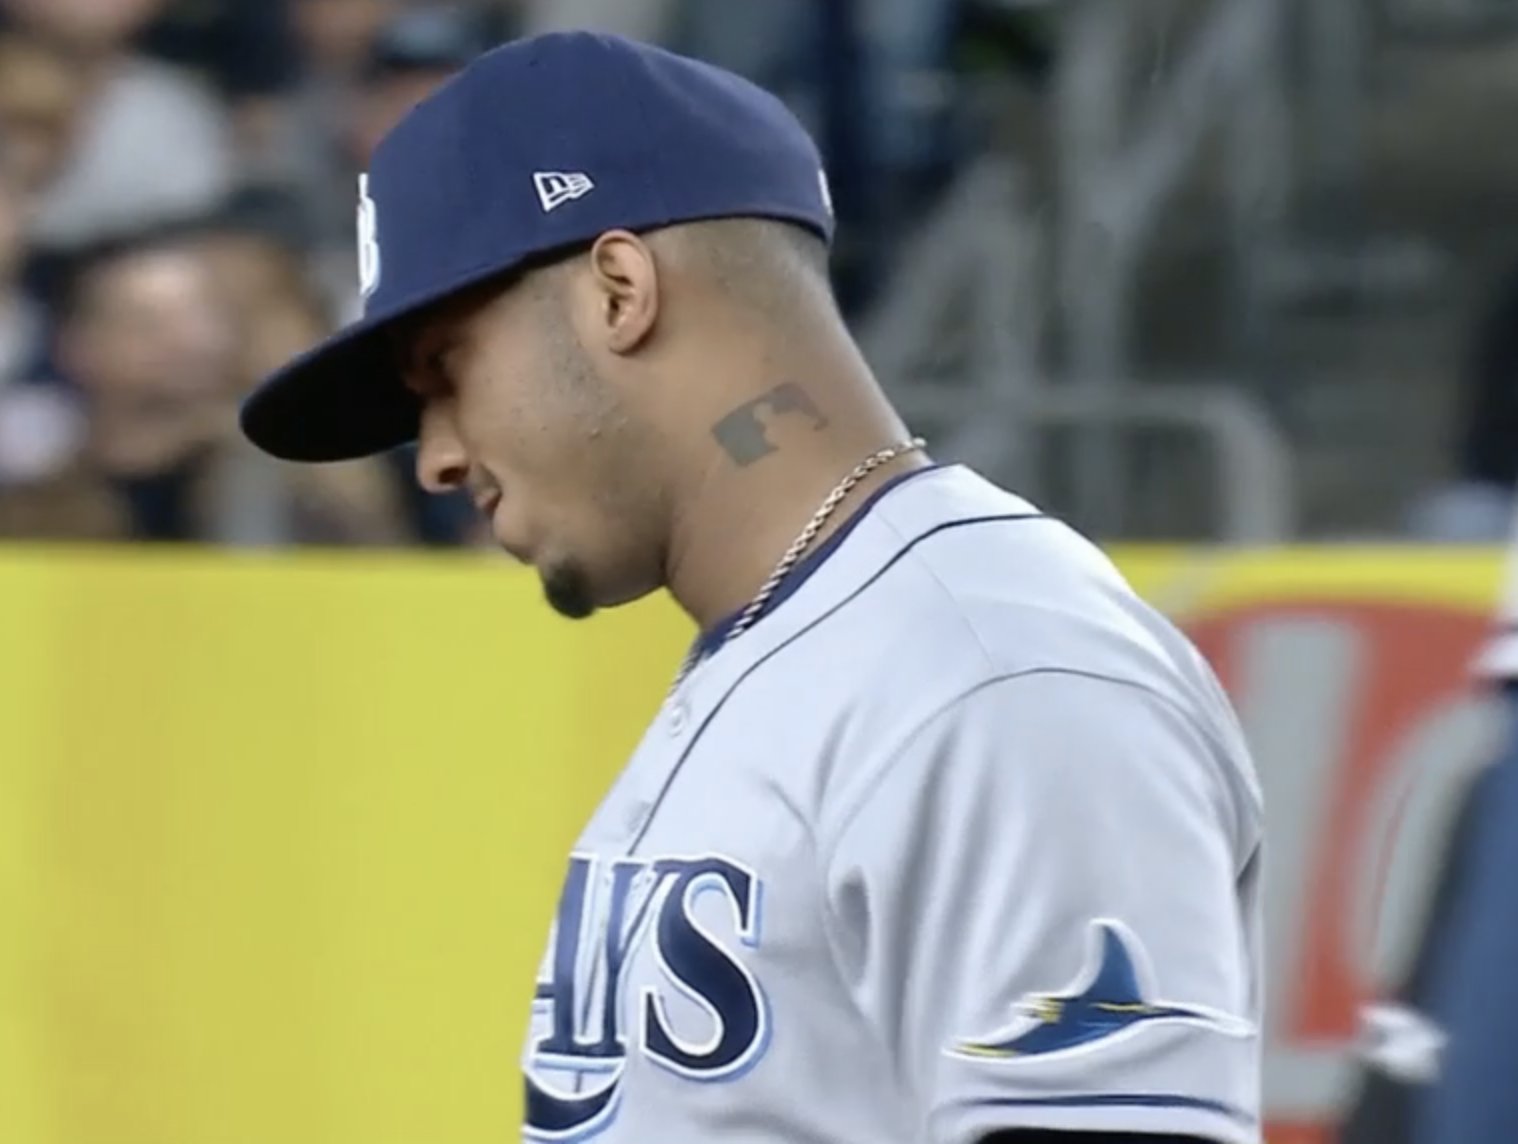 Talkin' Baseball on X: Just noticed the MLB logo tattoo on Wander